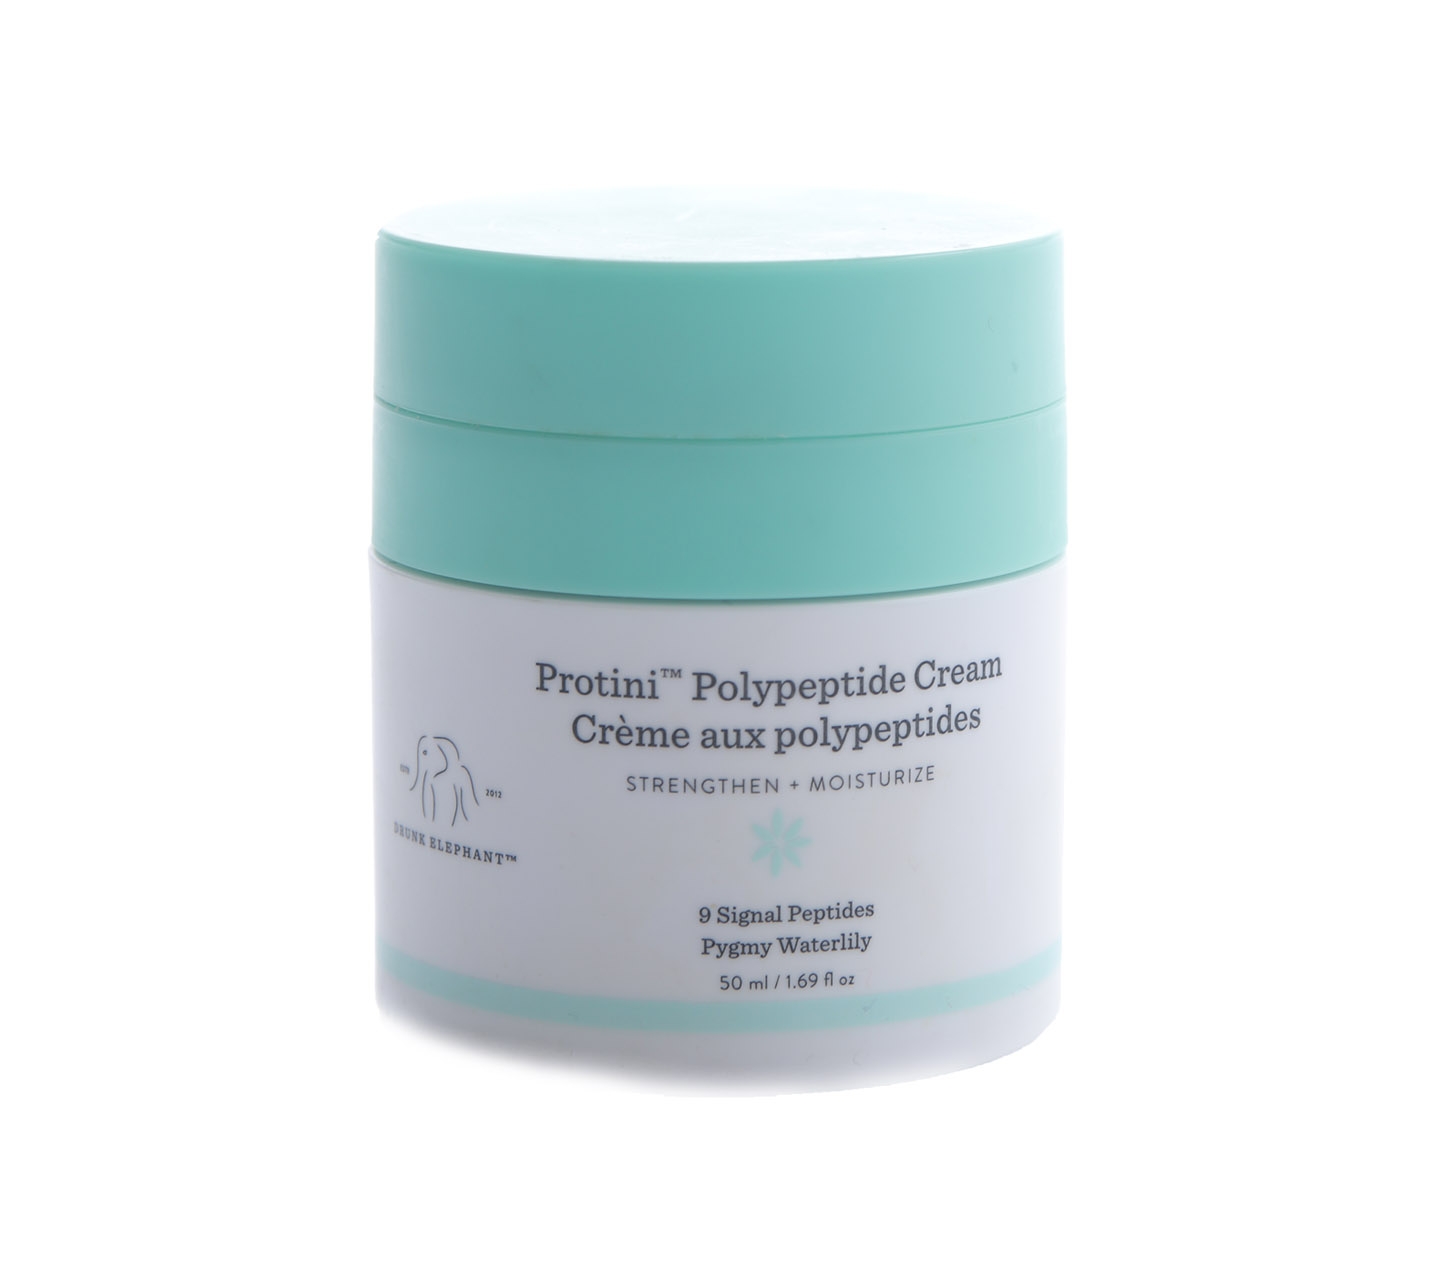 Drunk Elephant Protini Polypeptide Cream Creme Aux Polypeptides Skin Care